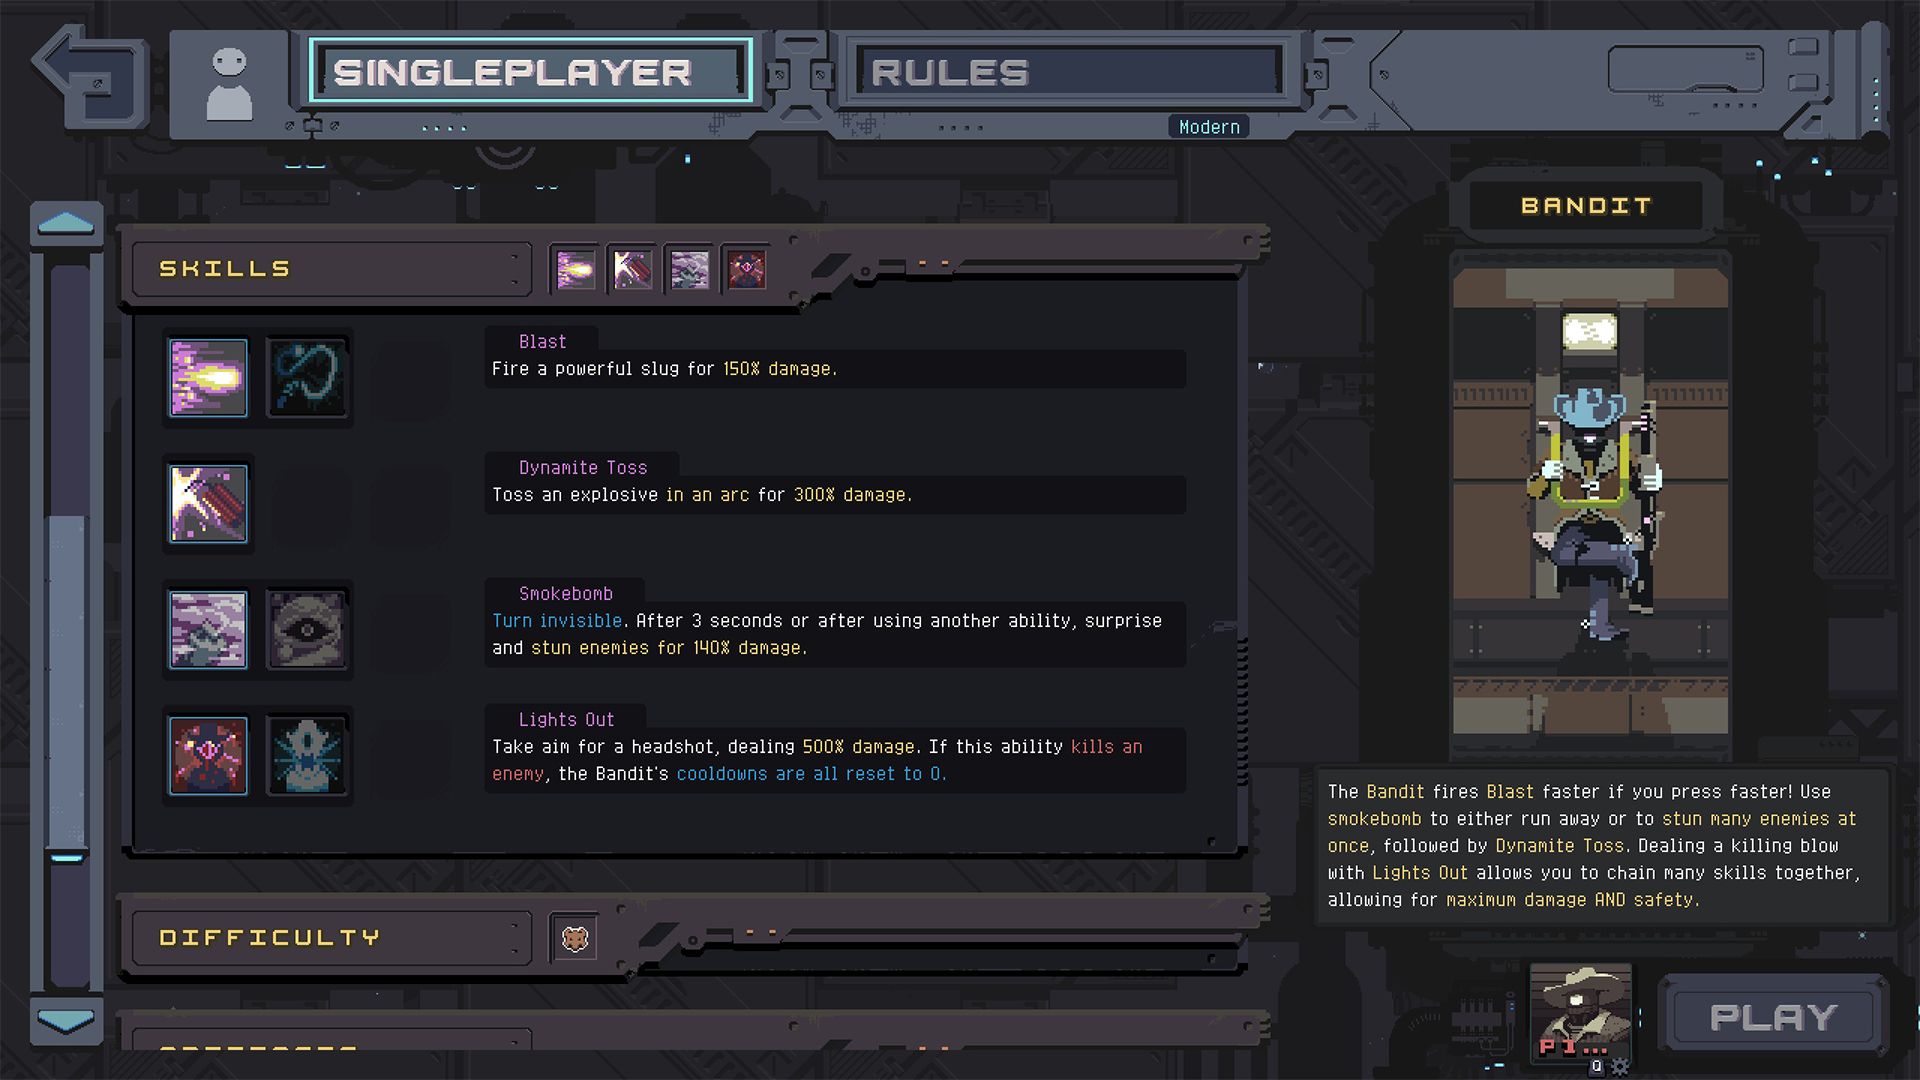 bandit skill descriptions on character select screen